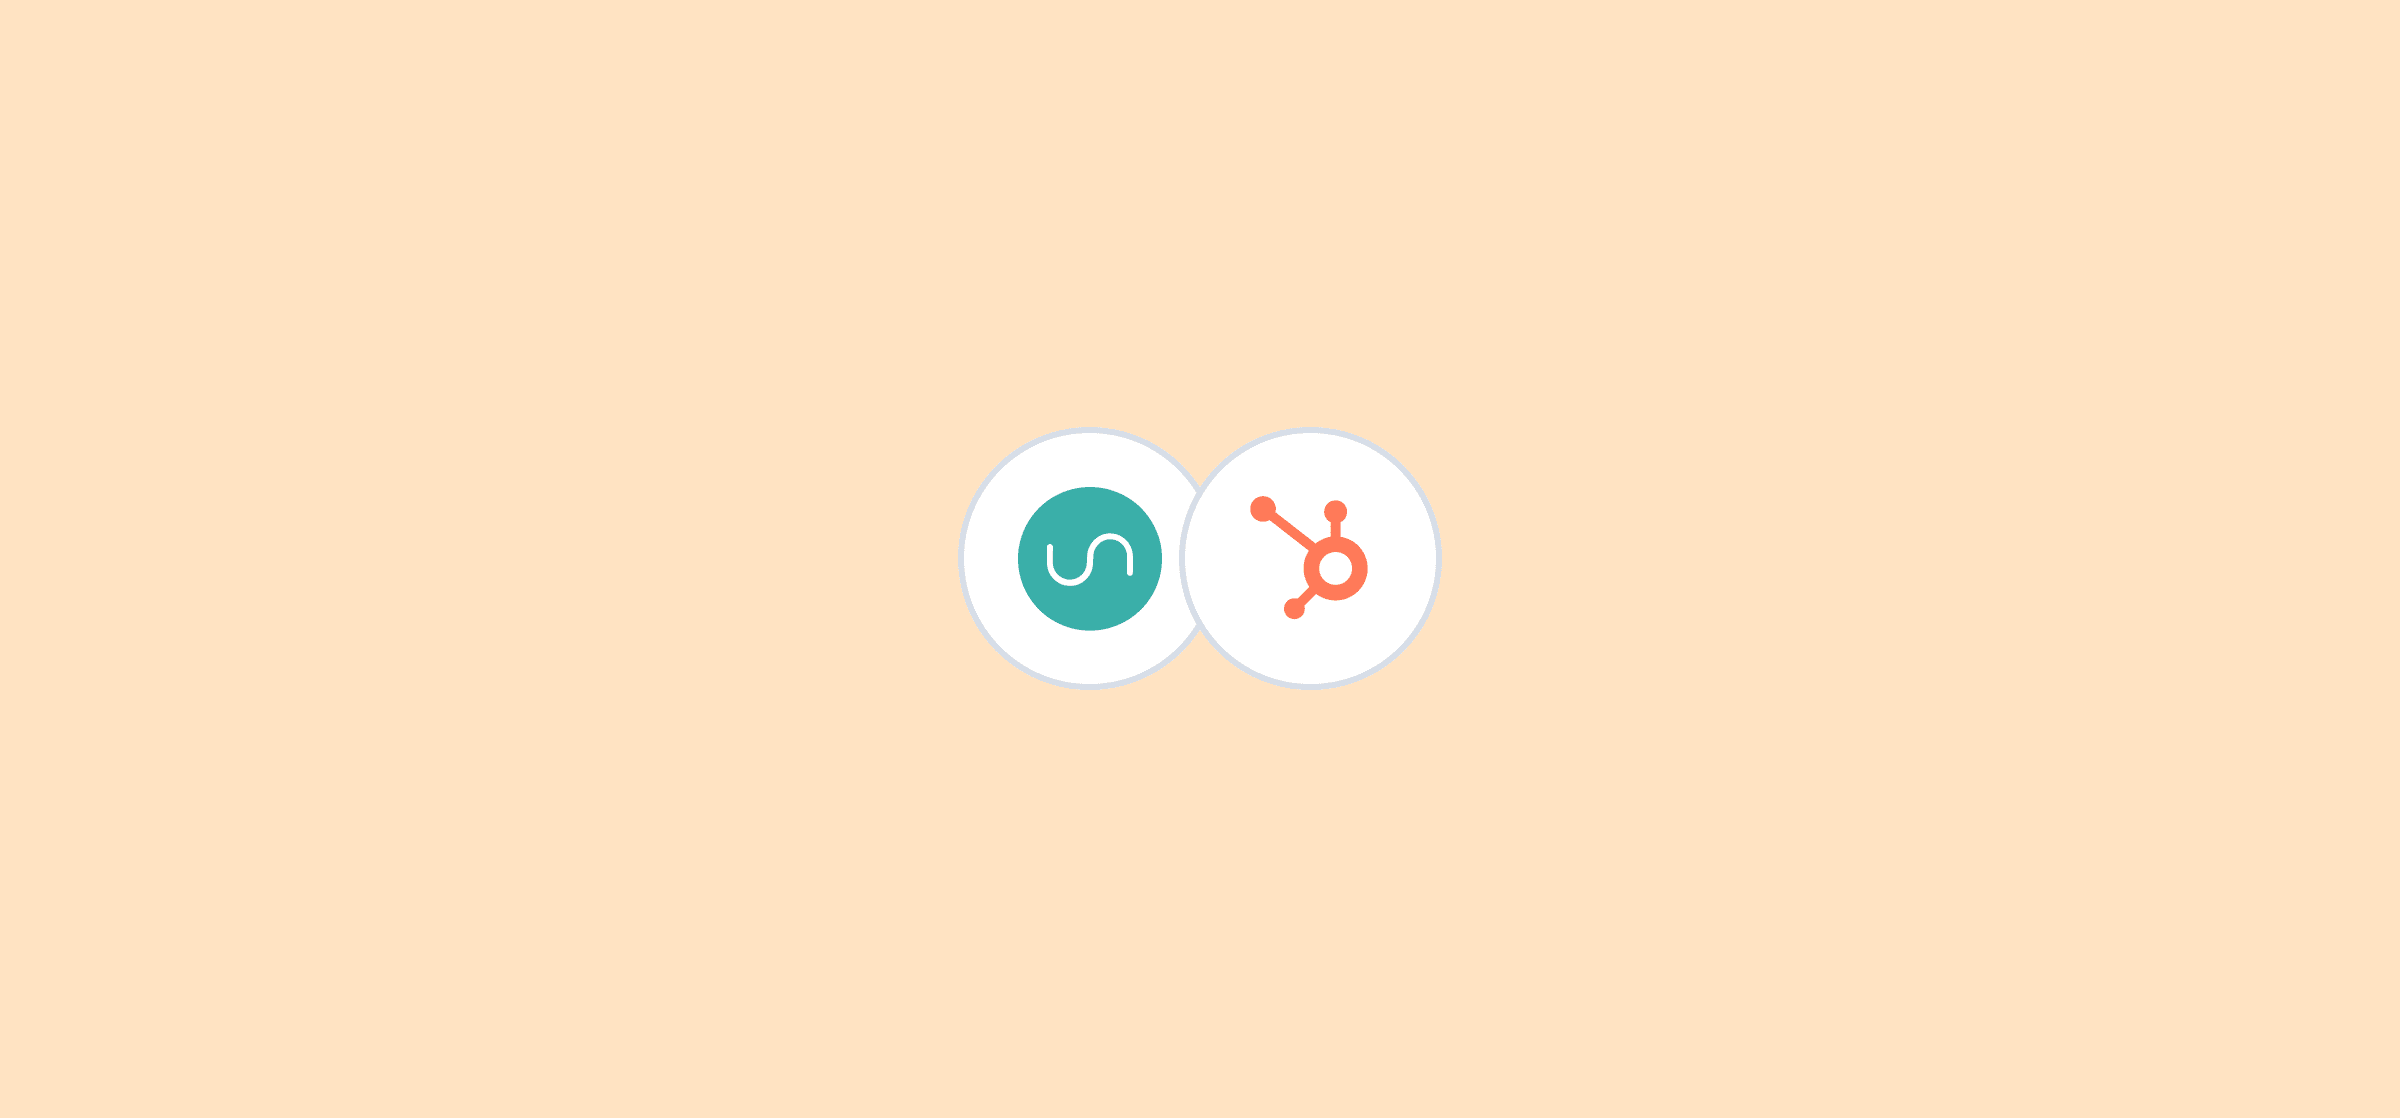 Logos for Unito and HubSpot, representing the Unito vs. HubSpot's Data Sync post